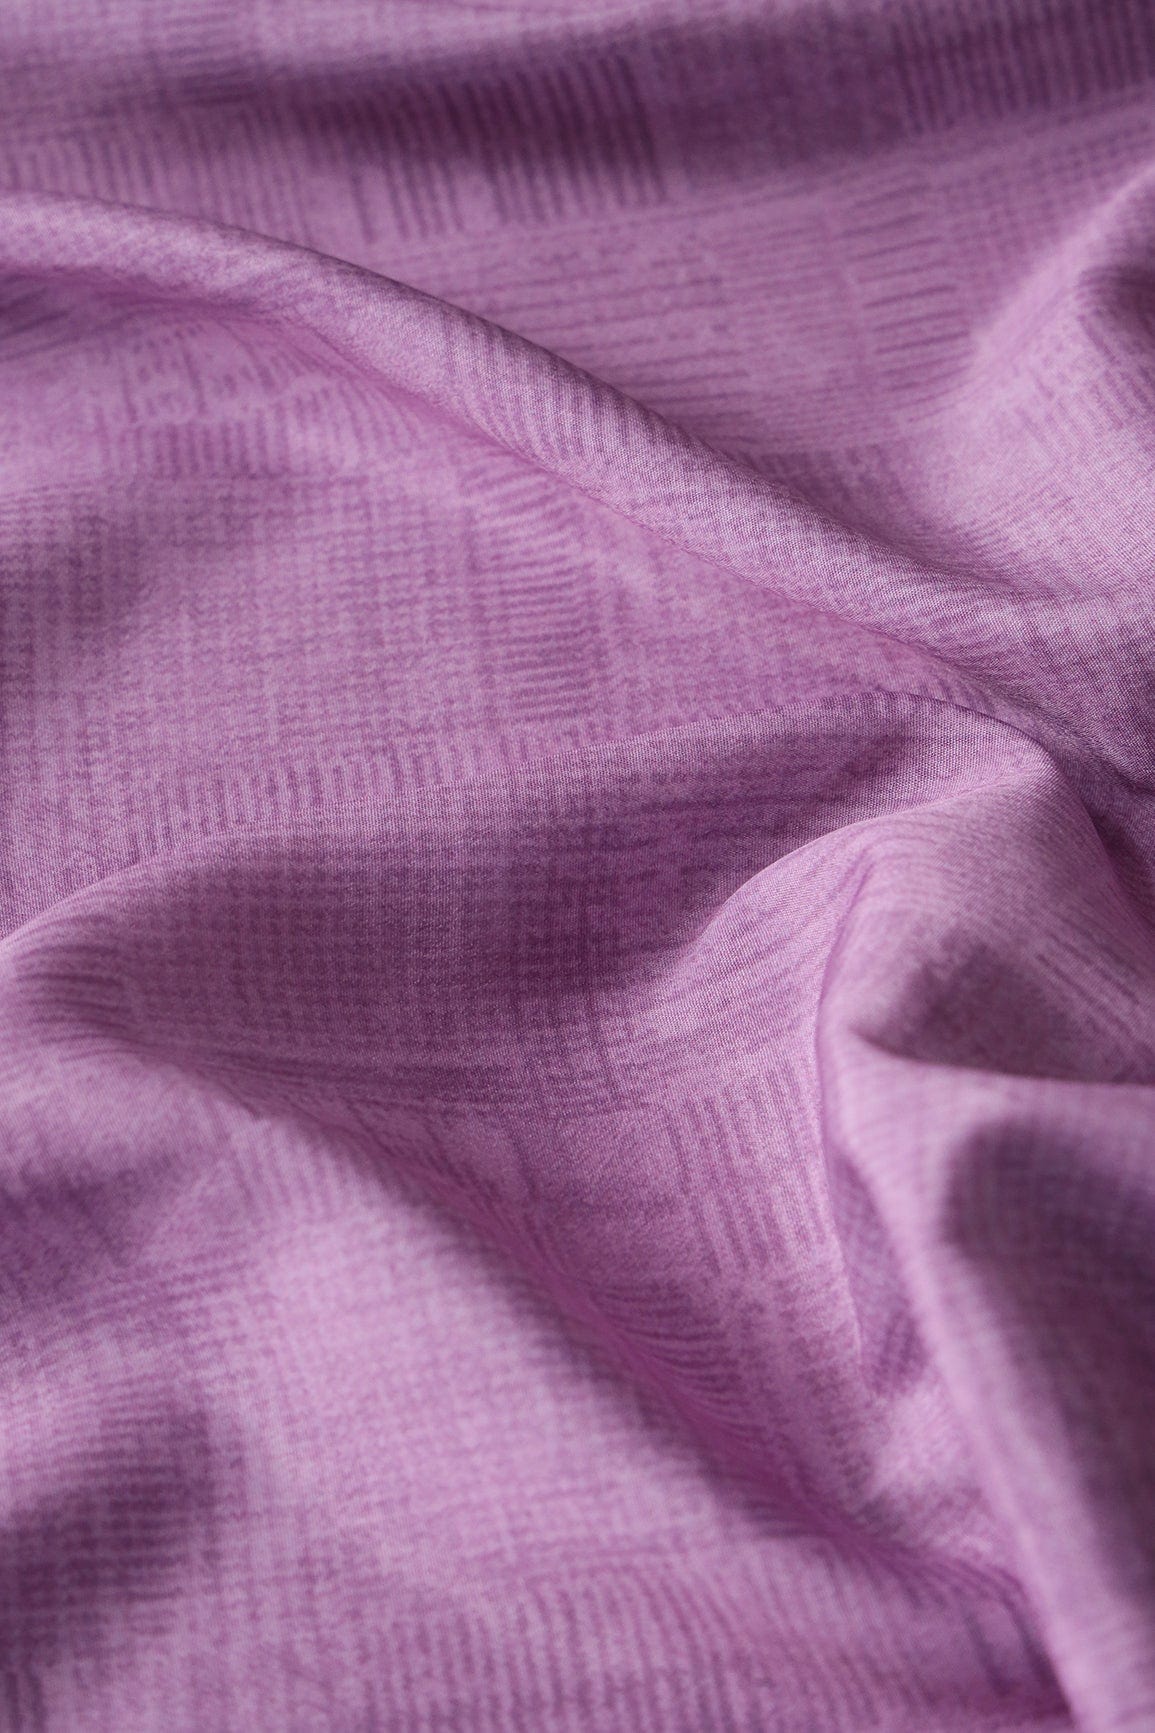 doeraa Prints Light Purple Texture Pattern Digital Print On French Crepe Fabric